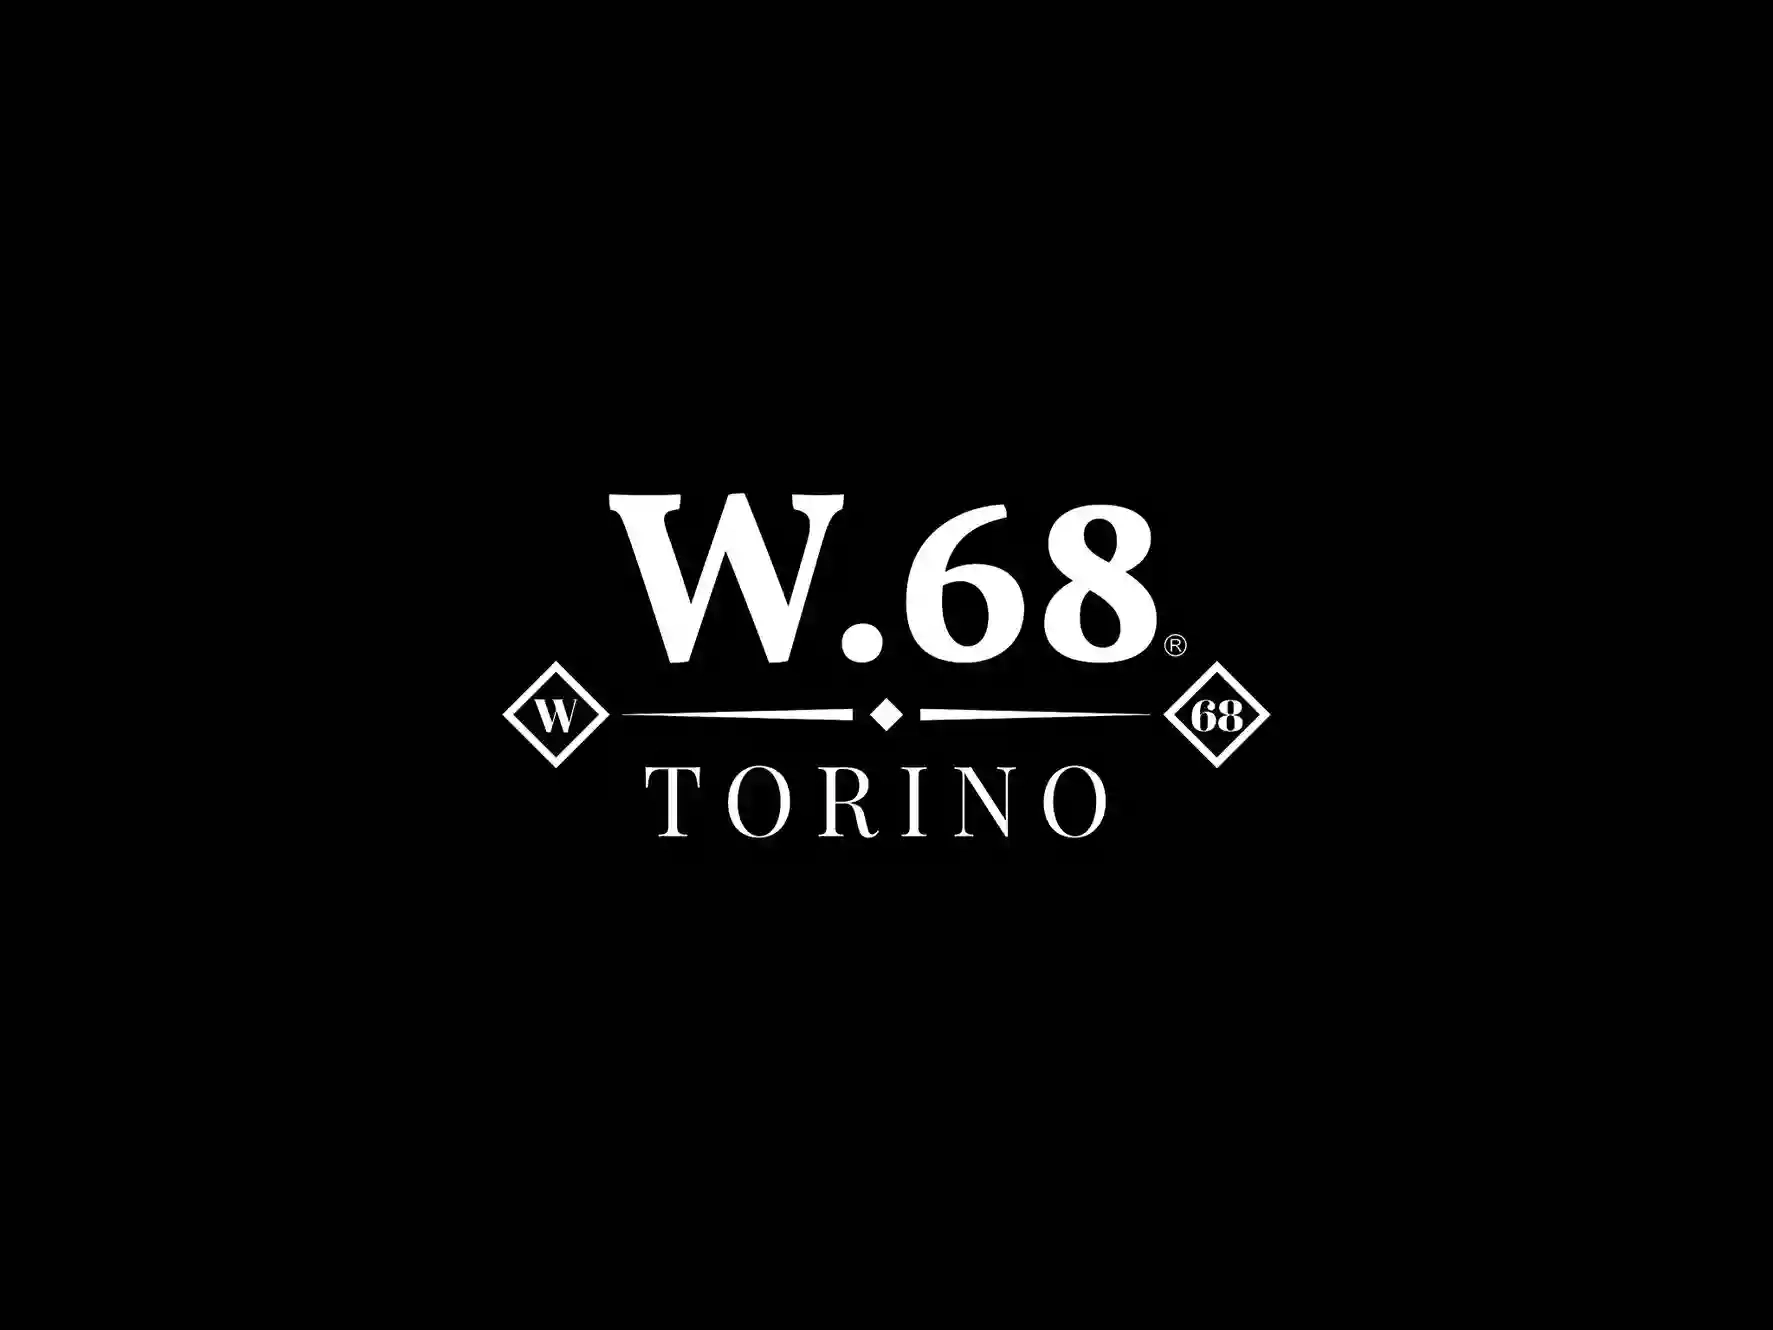 W.68 Torino